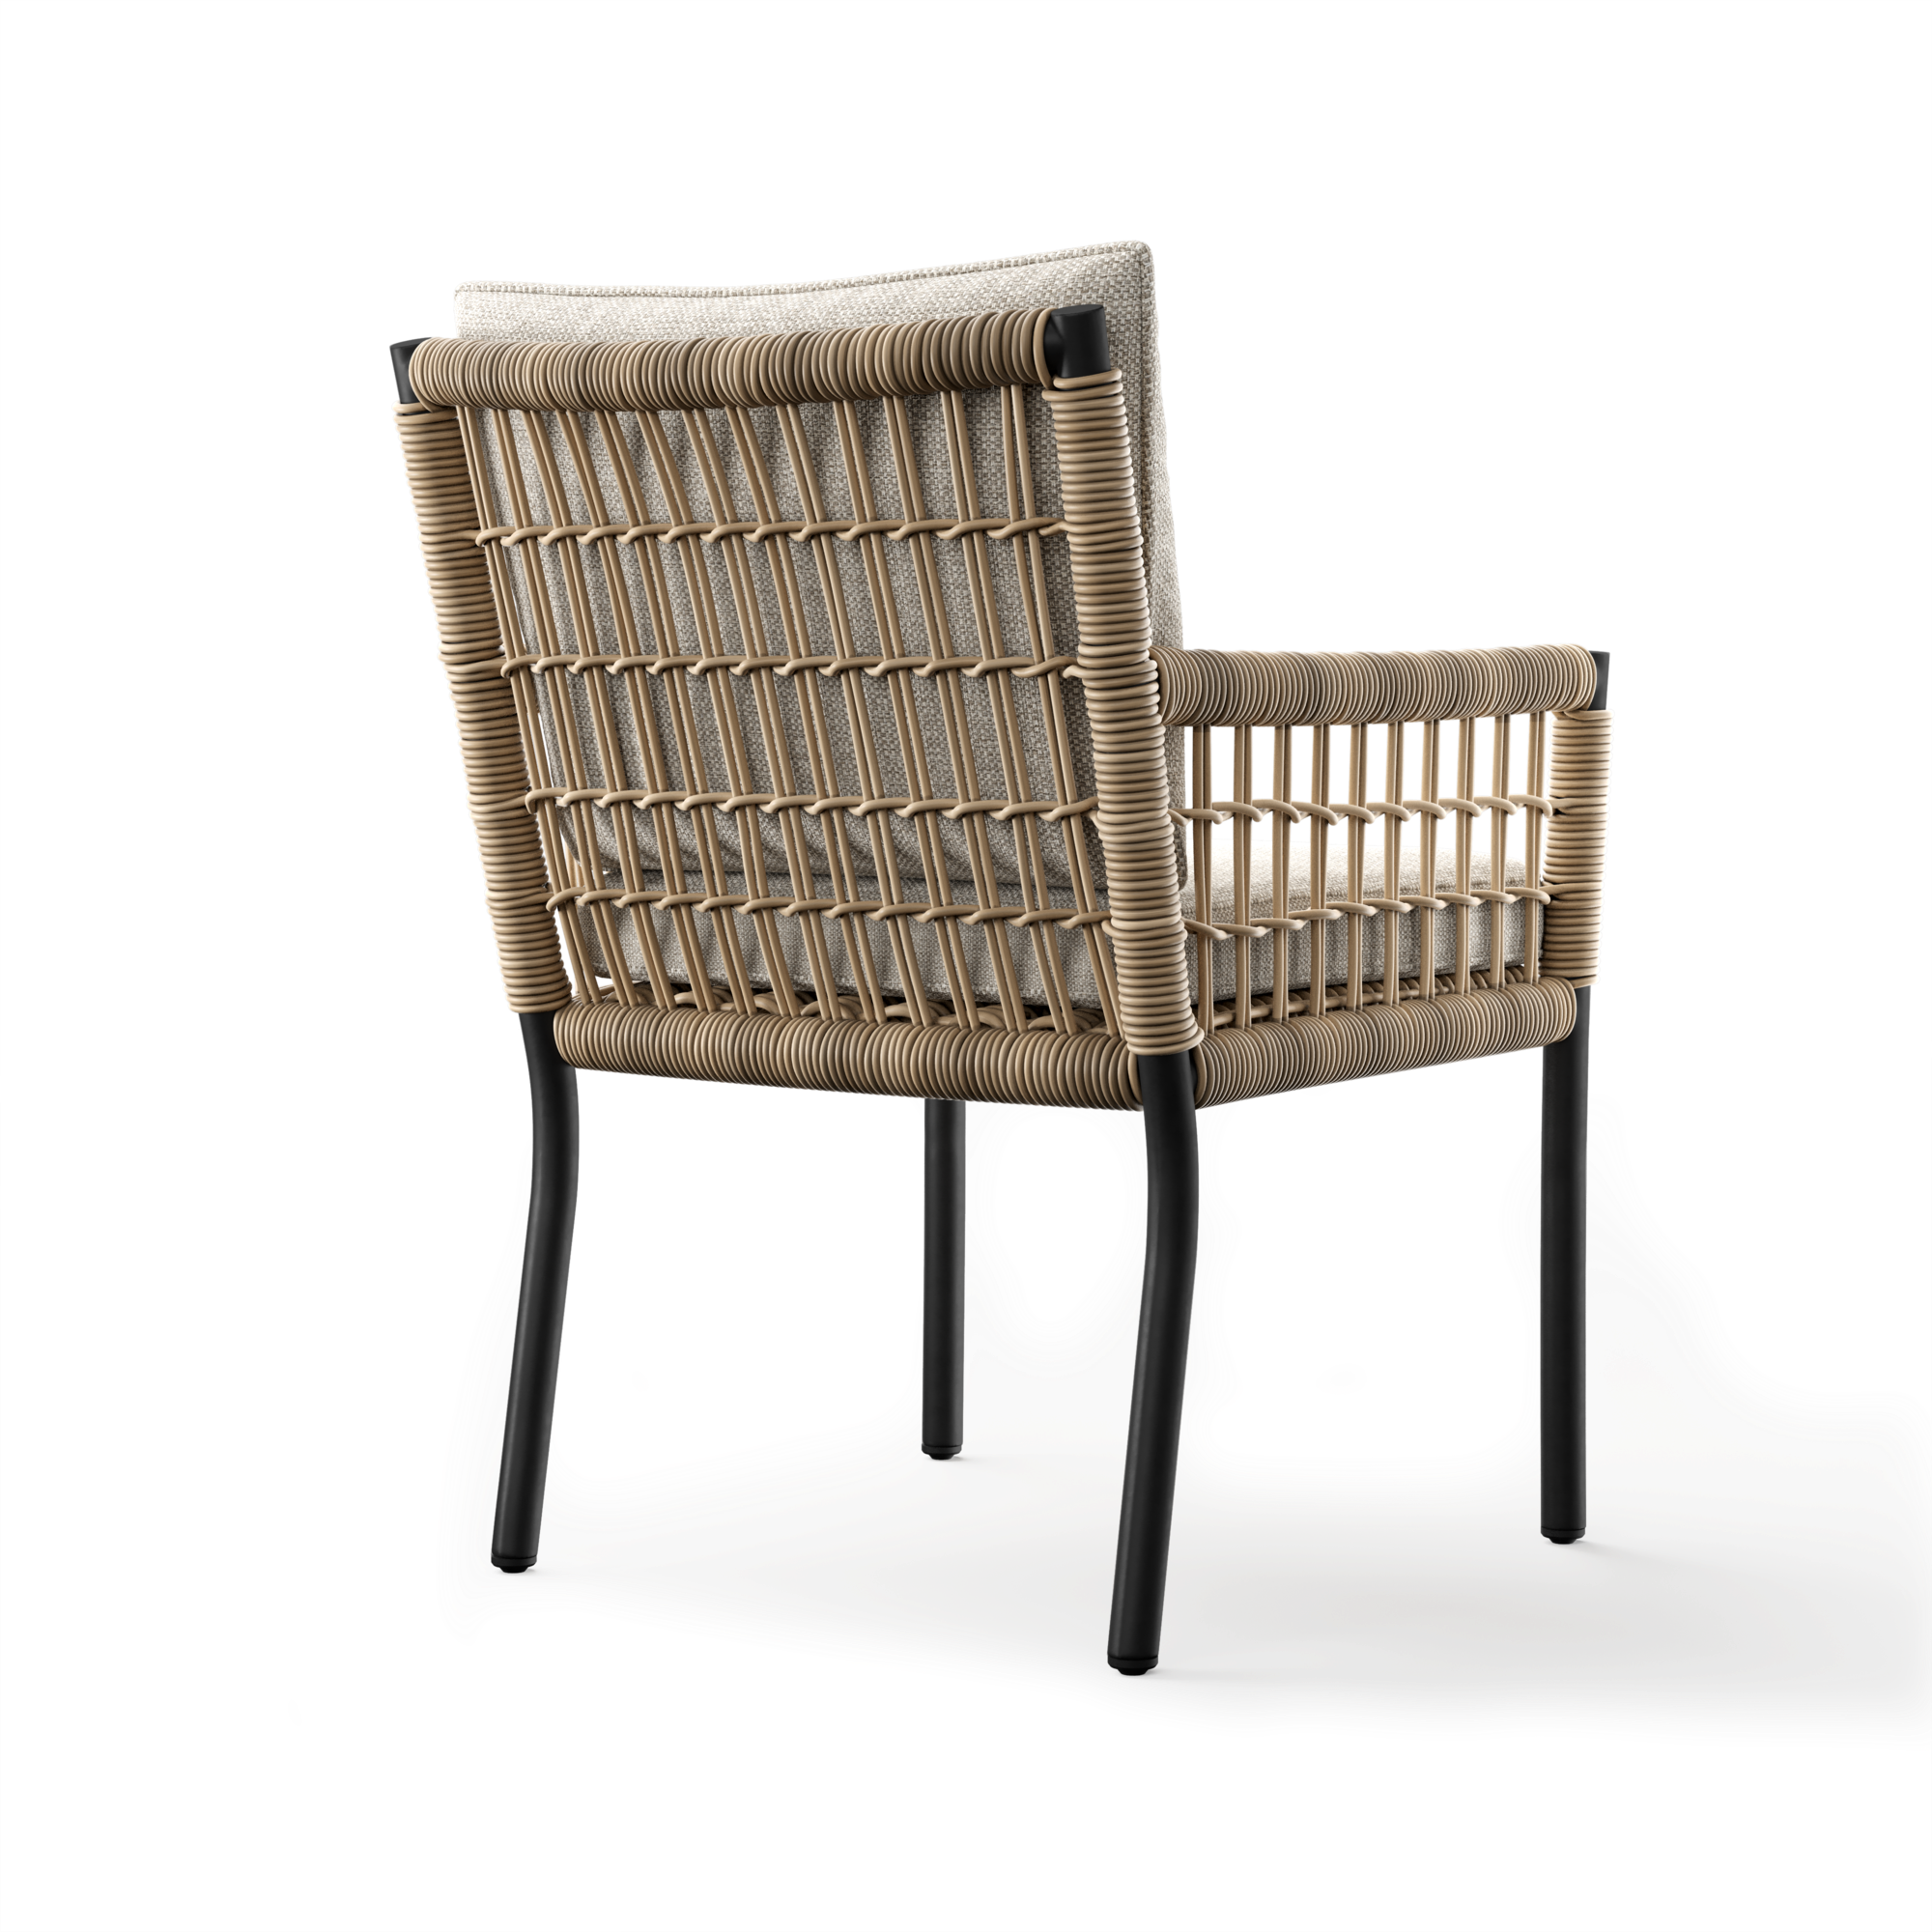 Lazio dining chair